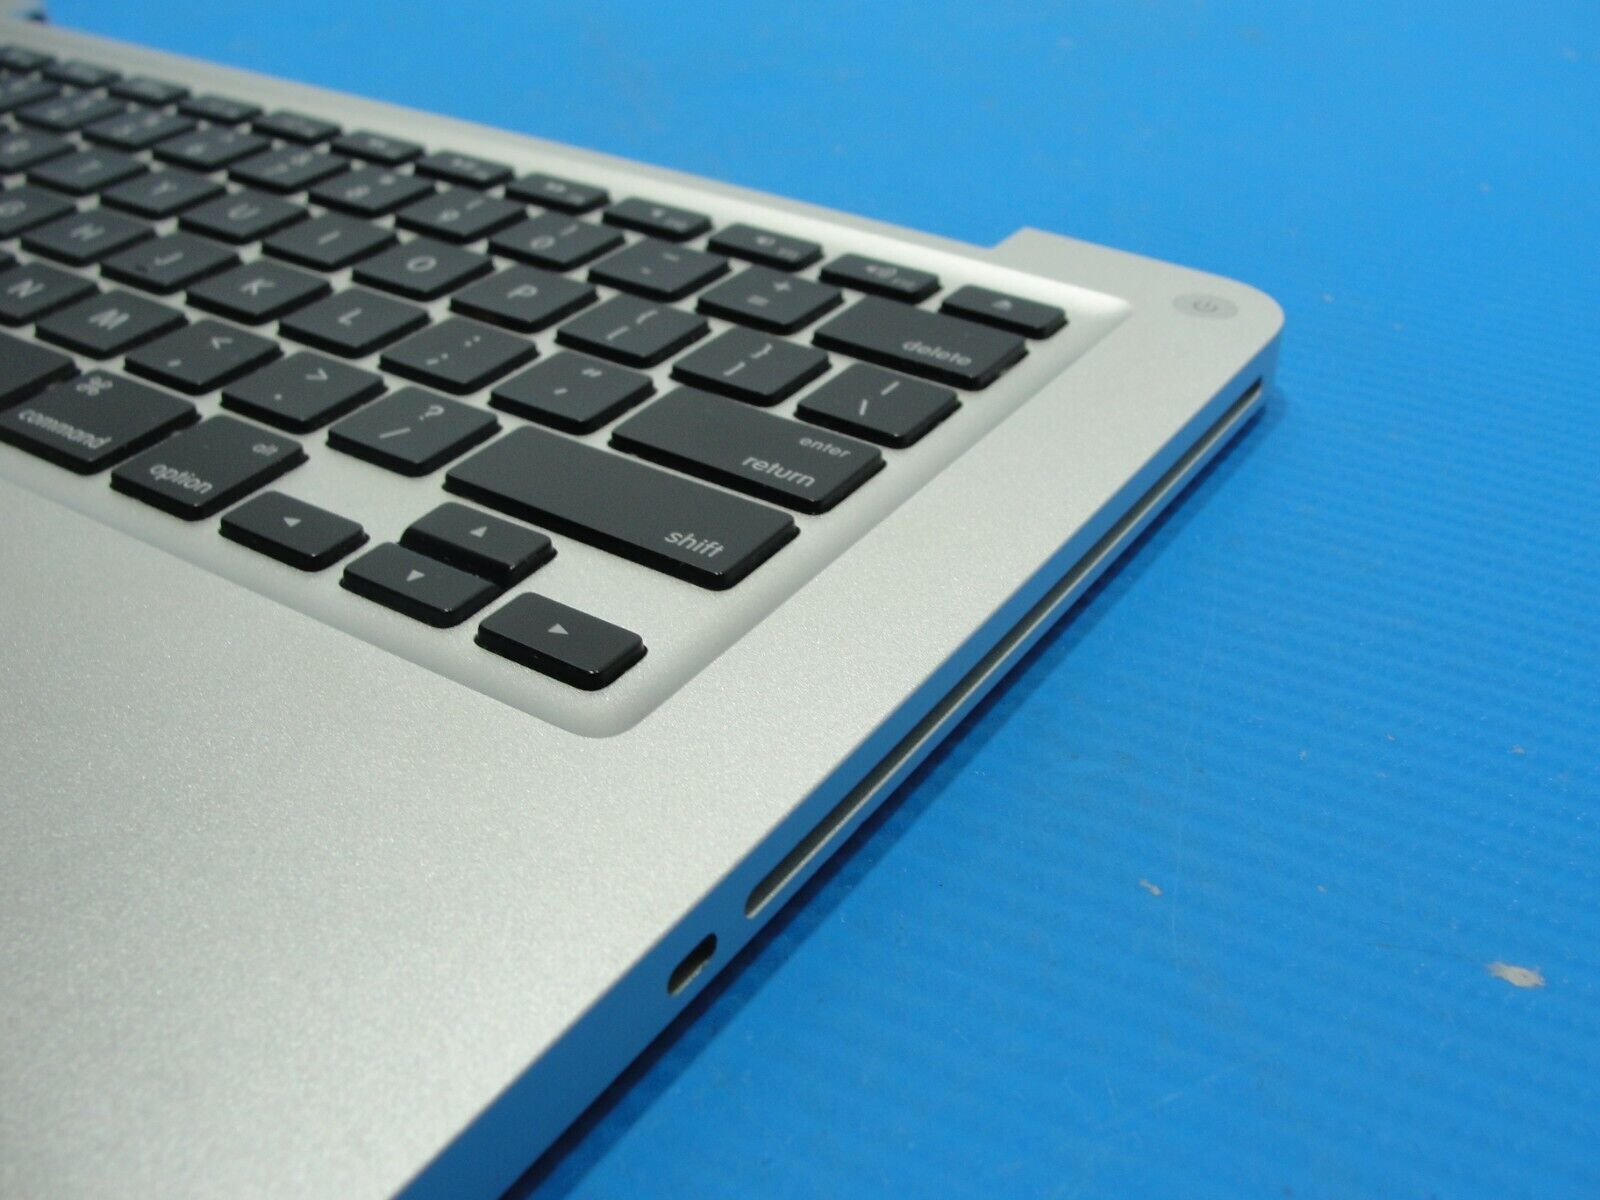 MacBook Pro A1278 13 2011 MC700LL/A Top Case w/Trackpad Keyboard 661-5871